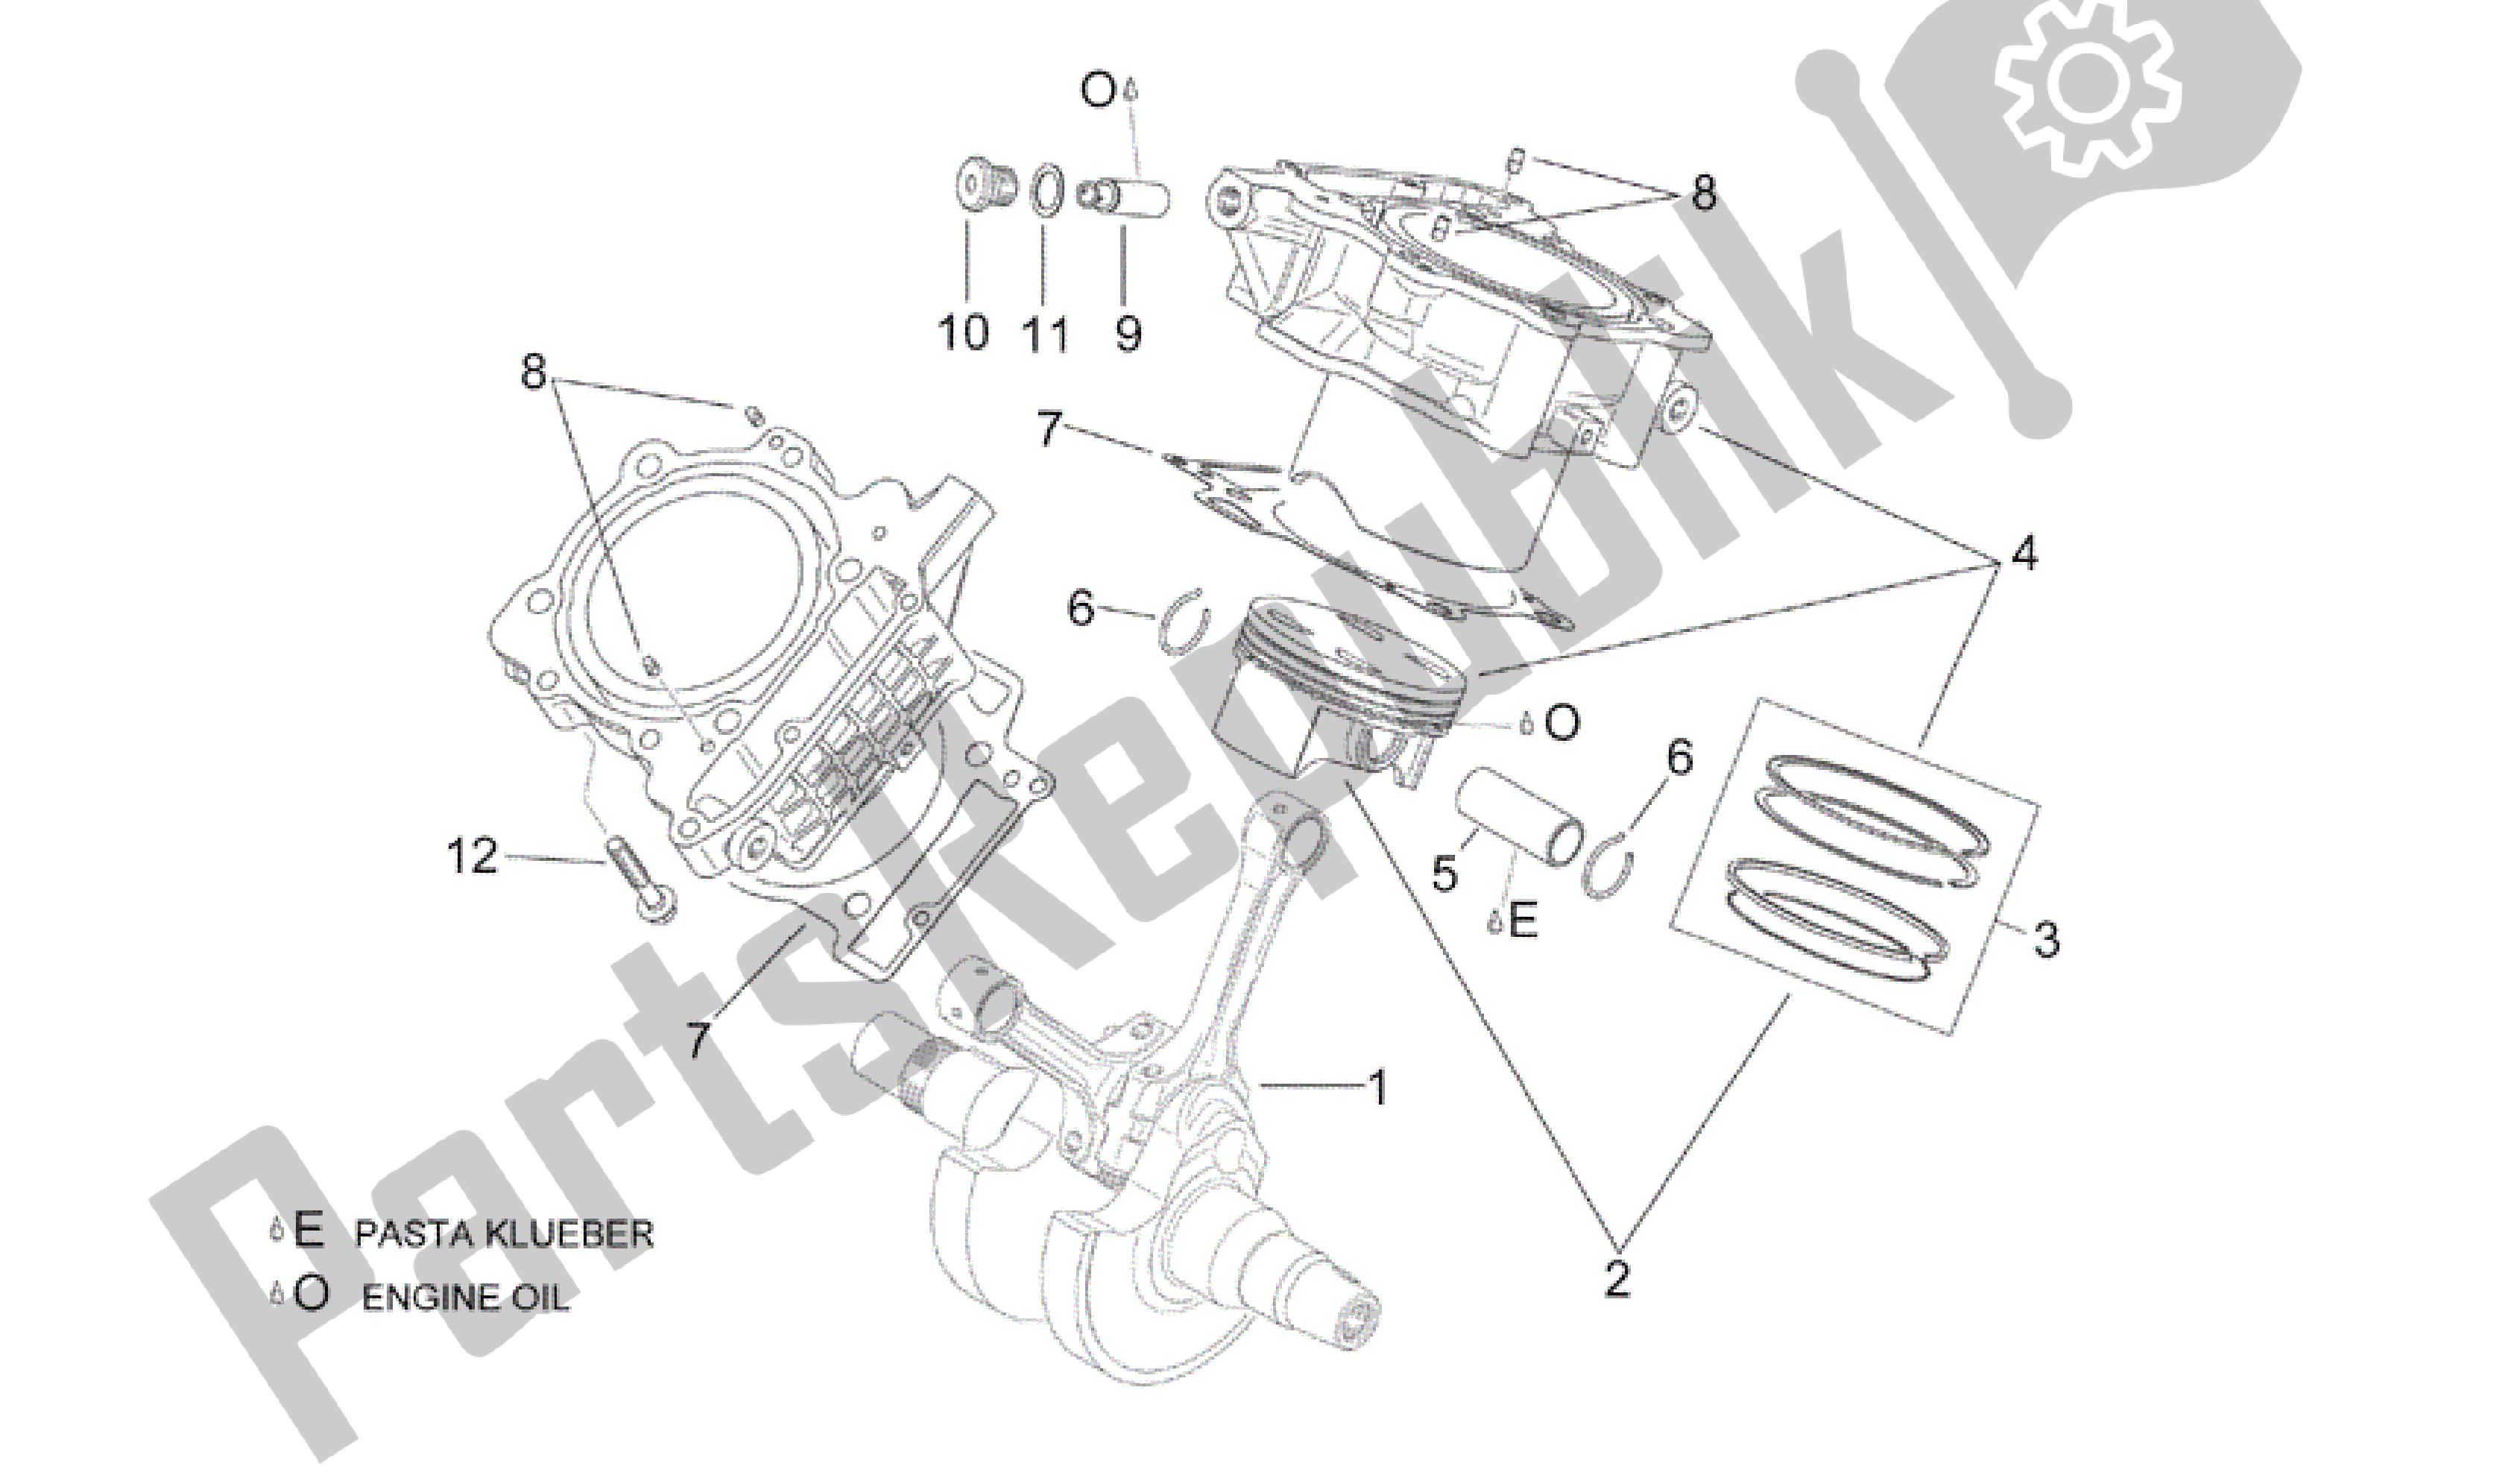 All parts for the Crankshaft Ii of the Aprilia RSV Mille 3963 1000 2003